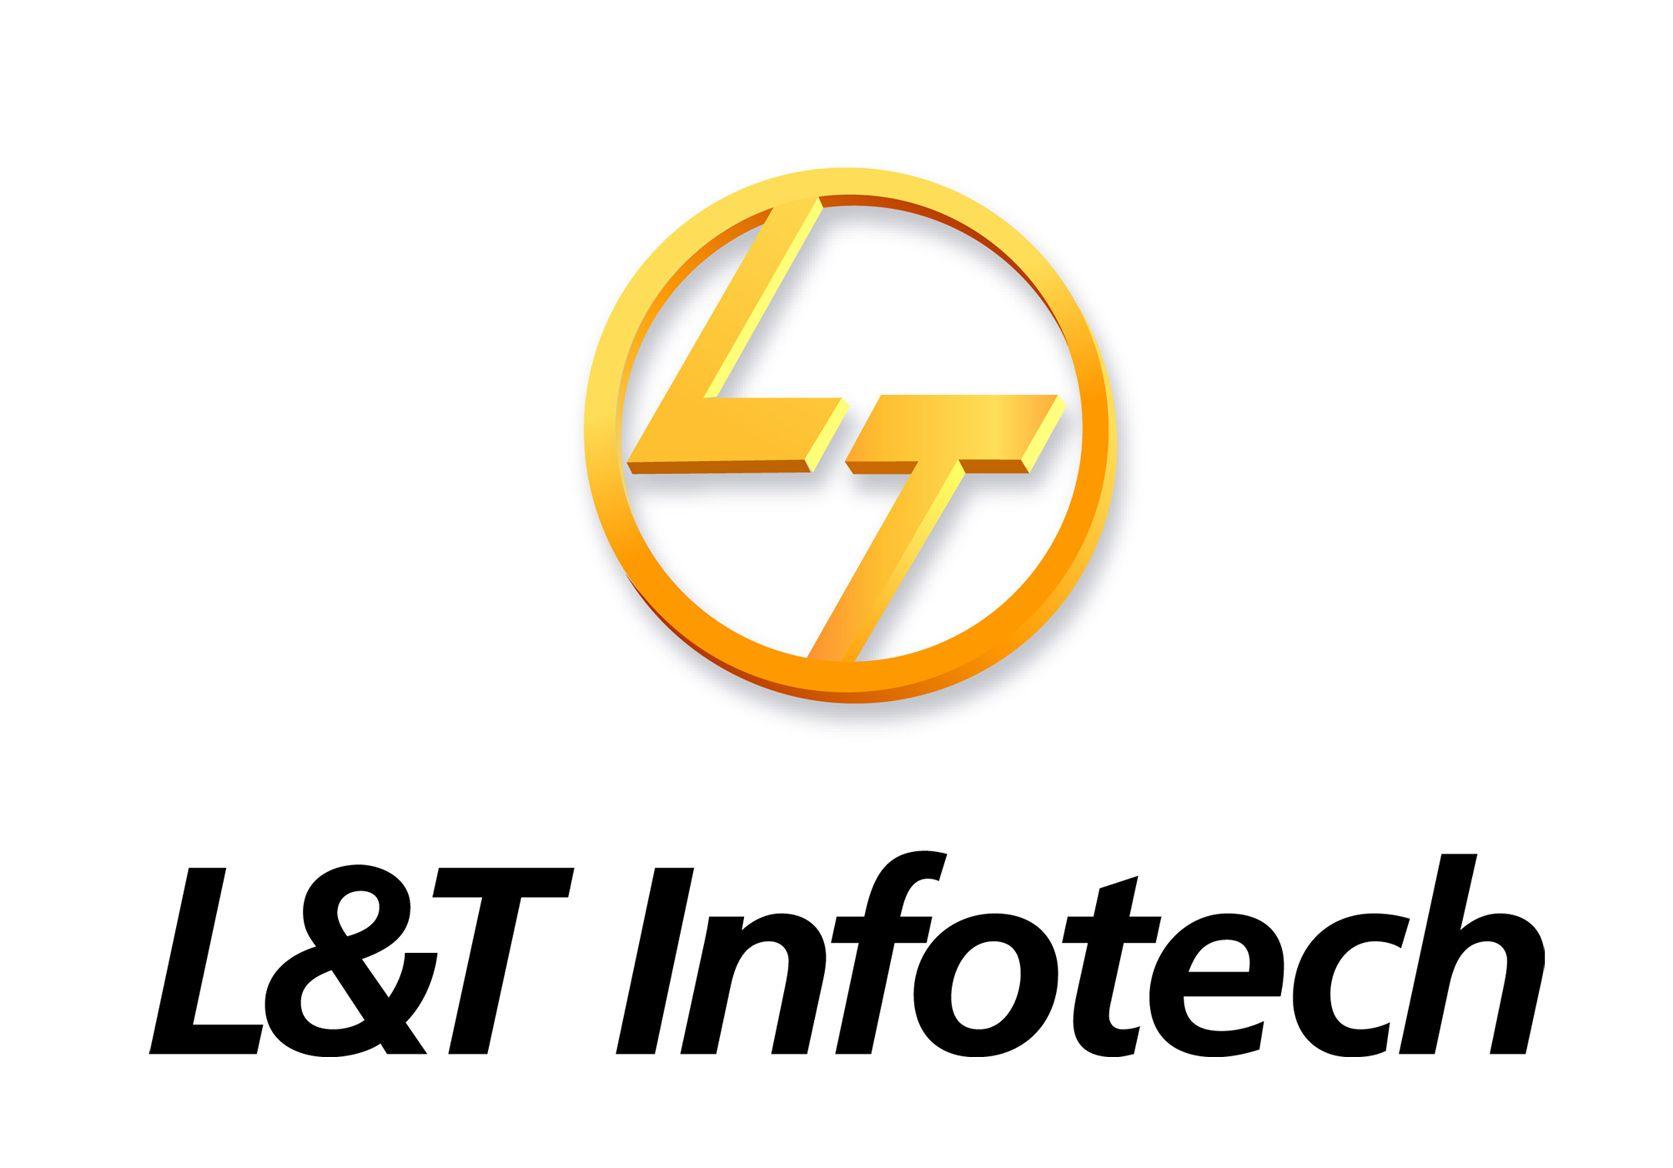 L Company Logo - File:L&T Infotech logo.jpg - Wikimedia Commons